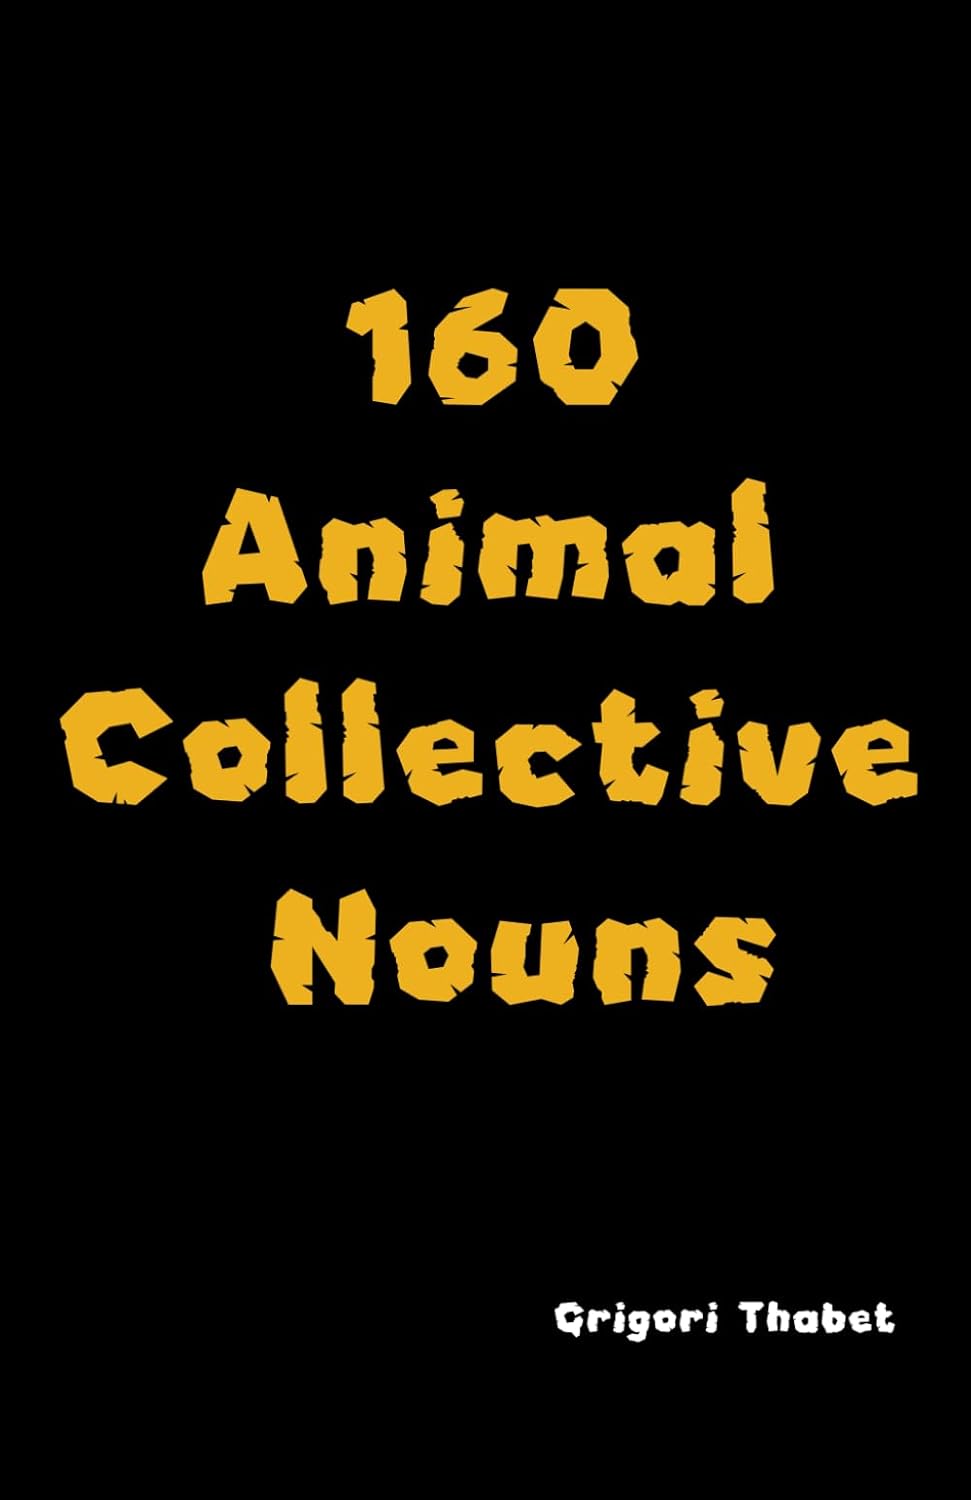 160 Animal Collective Nouns